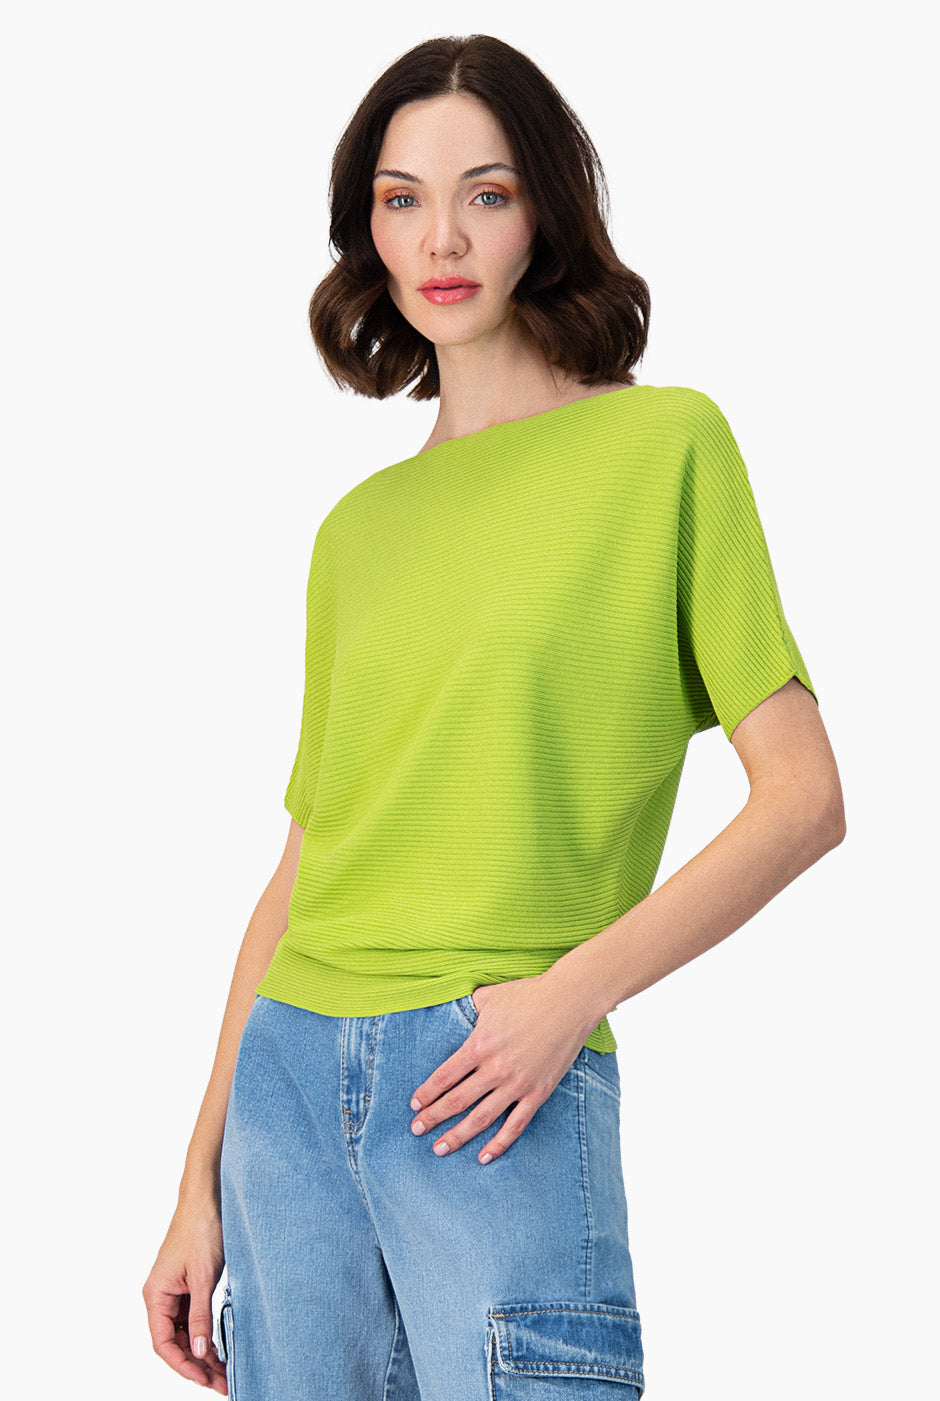 Blusa manga corta color verde claro